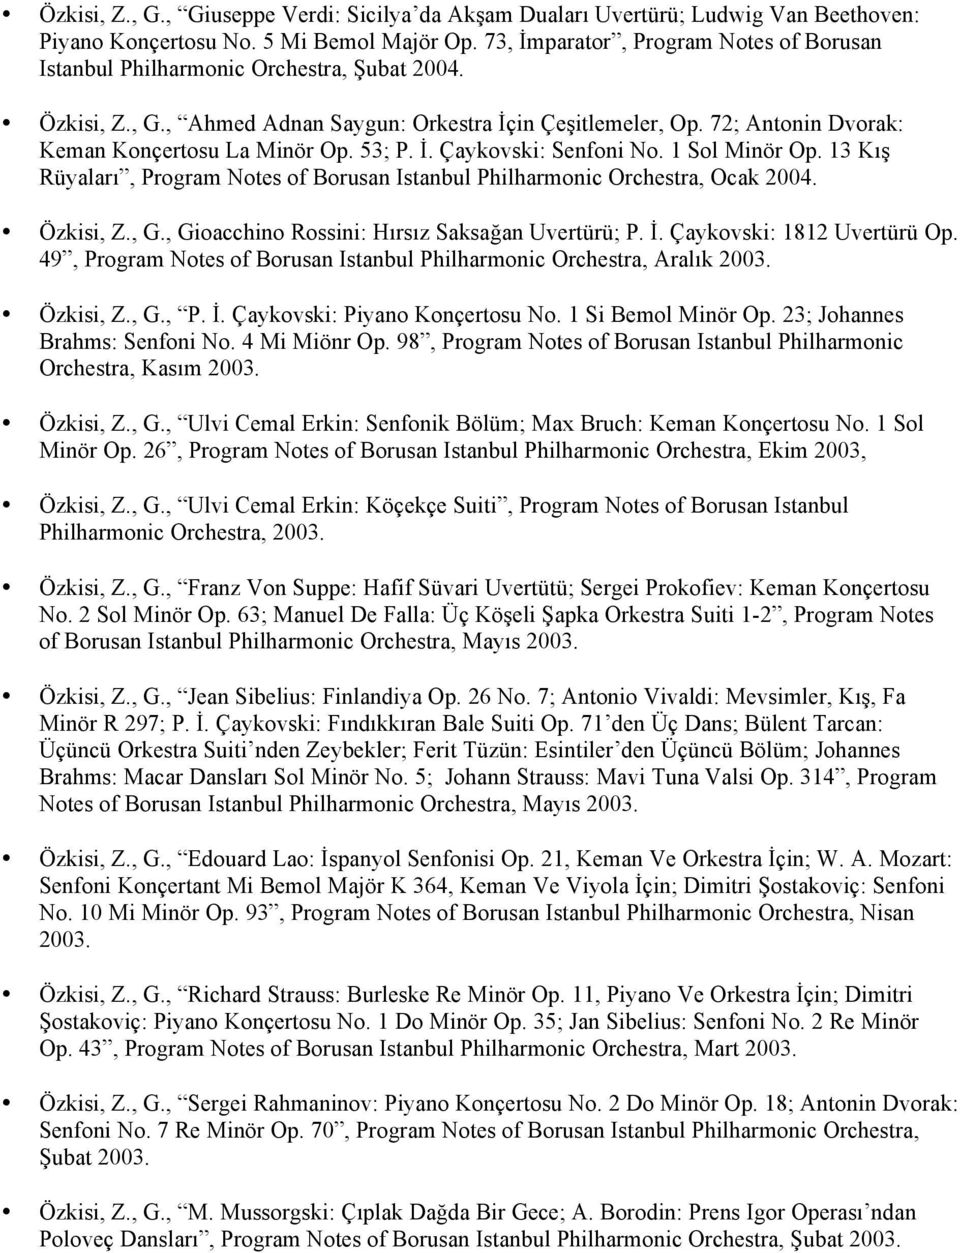 72; Antonin Dvorak: Keman Konçertosu La Minör Op. 53; P. İ. Çaykovski: Senfoni No. 1 Sol Minör Op. 13 Kış Rüyaları, Program Notes of Borusan Istanbul Philharmonic Orchestra, Ocak 2004. Özkisi, Z., G.